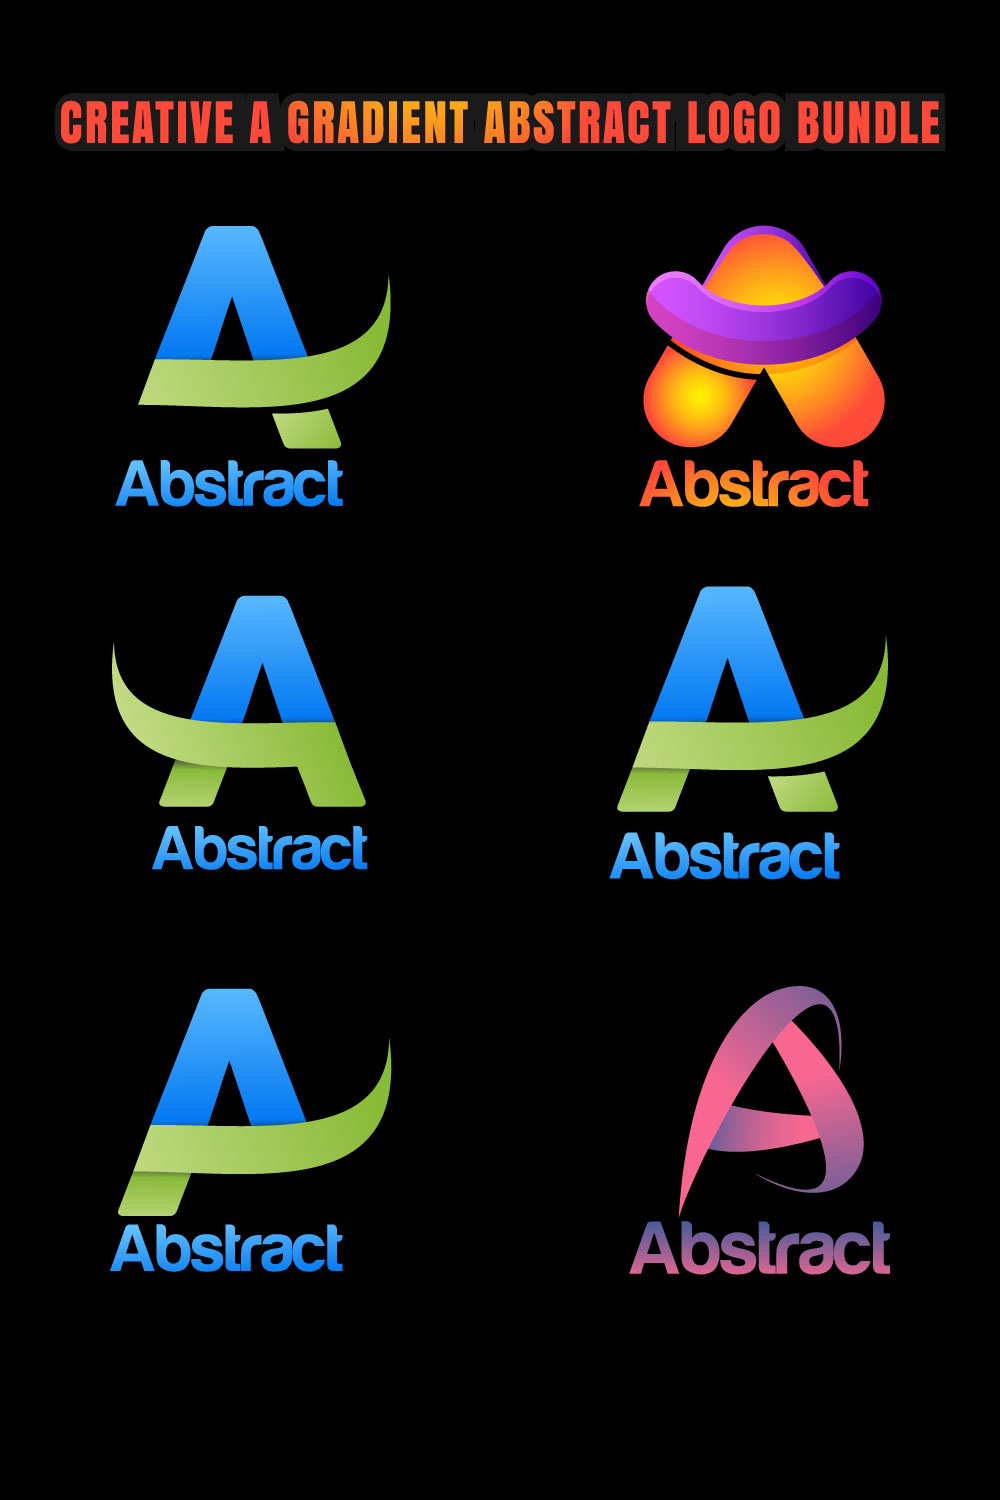 9 Creative A Gradient Abstract Logo Bundle pinterest image.